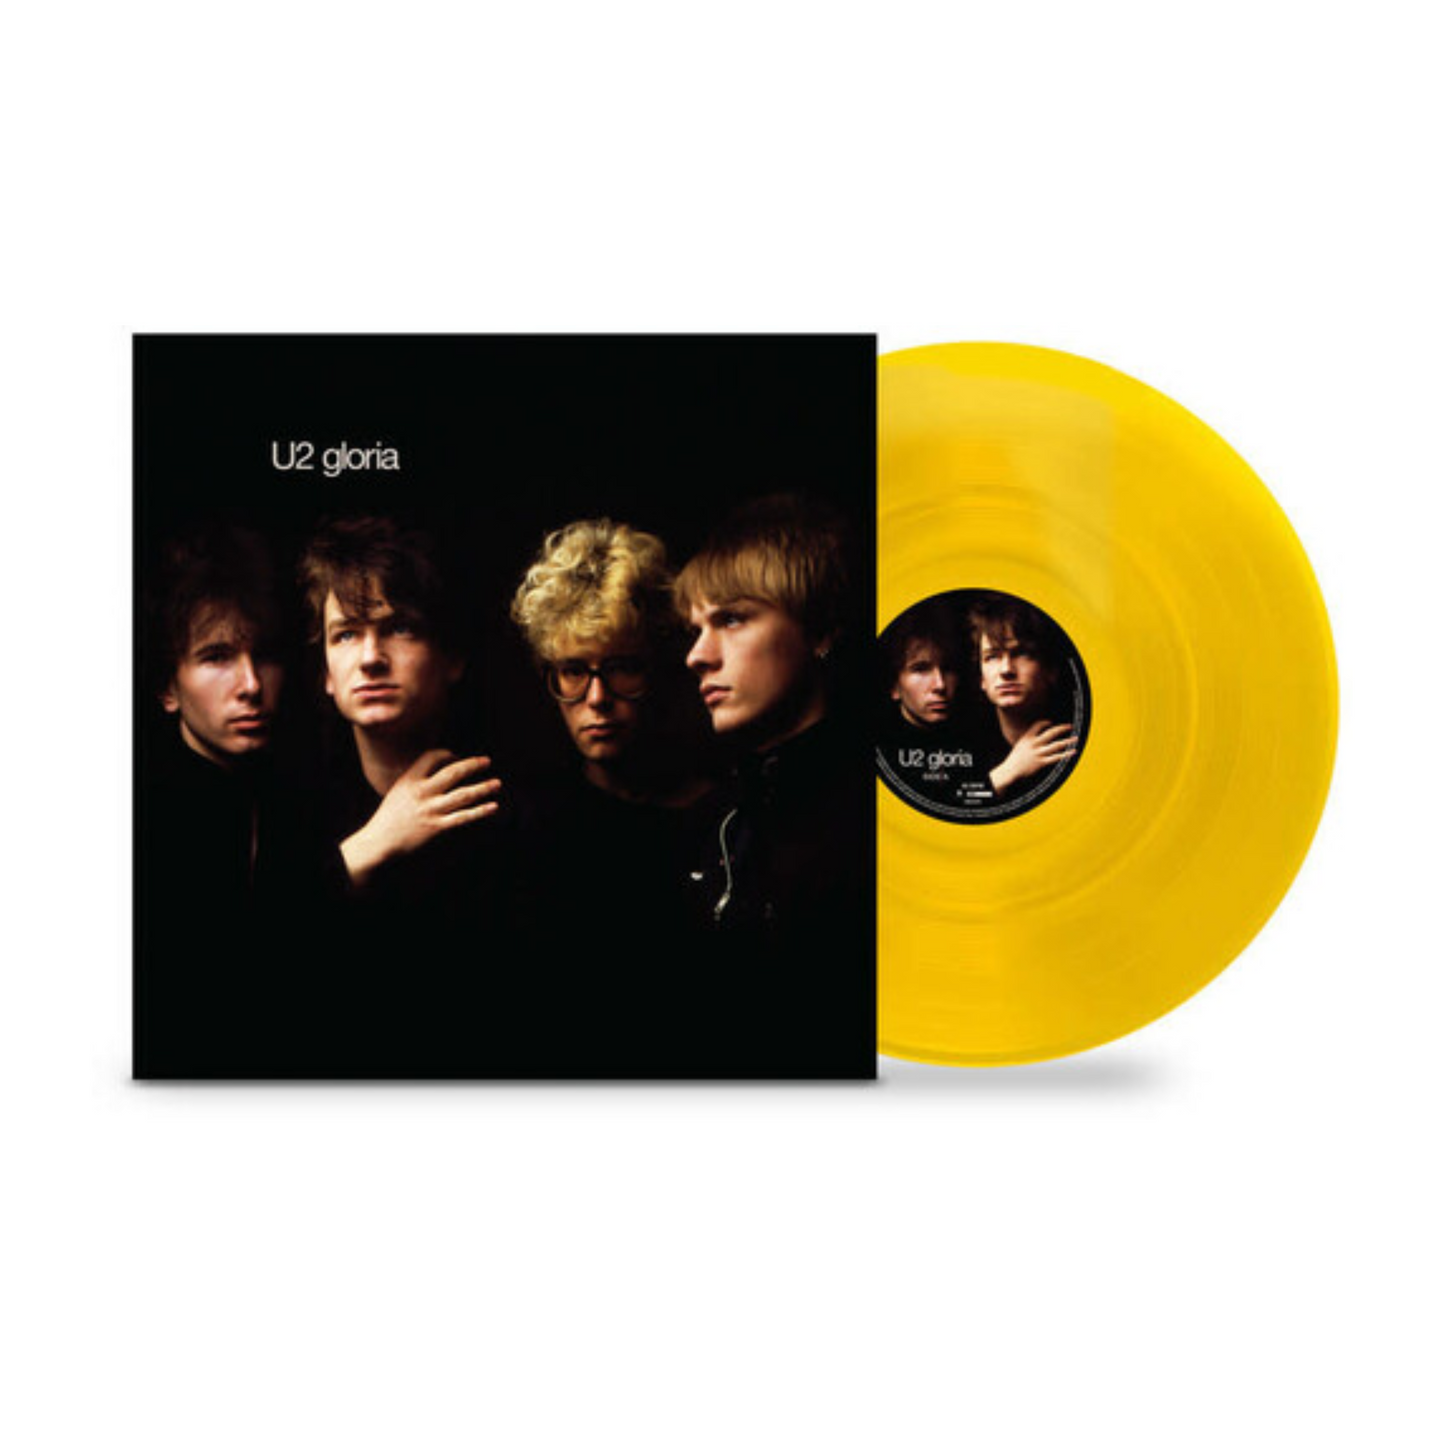 U2 - Gloria (40th Anniversary) 12"  (Vinyl)